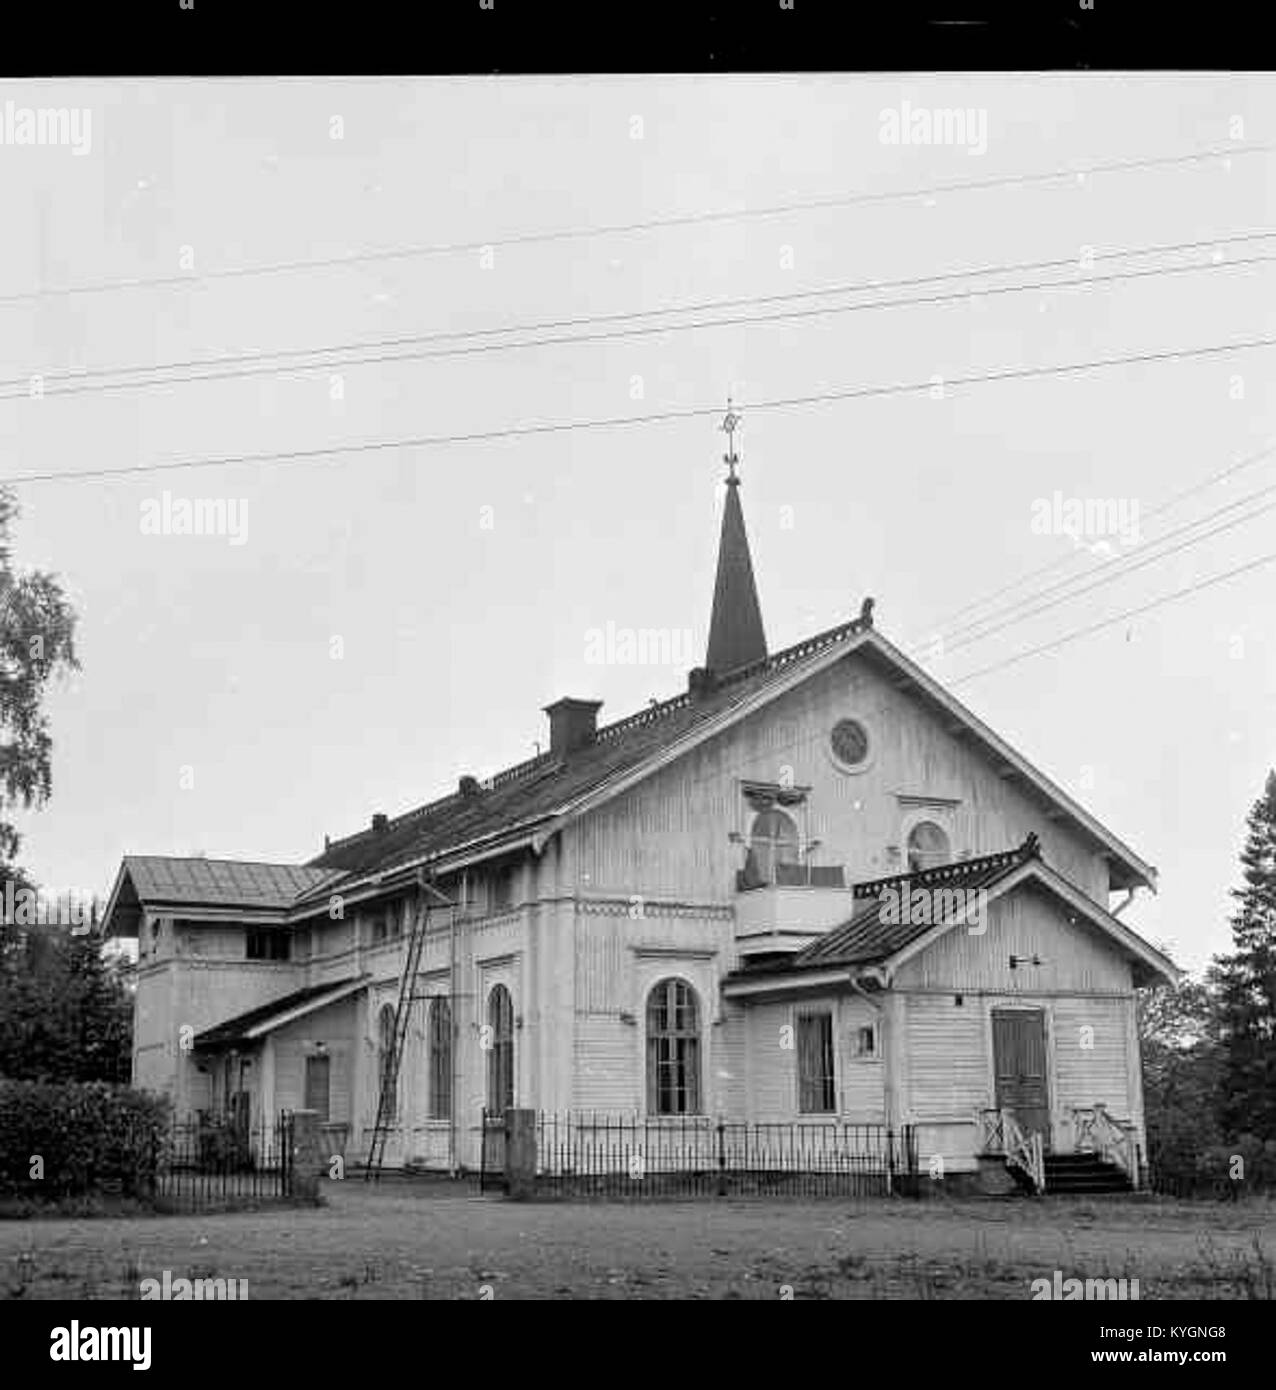 Söderala, Ljusne kyrka - KMB - 16000200038209 Stock Photo